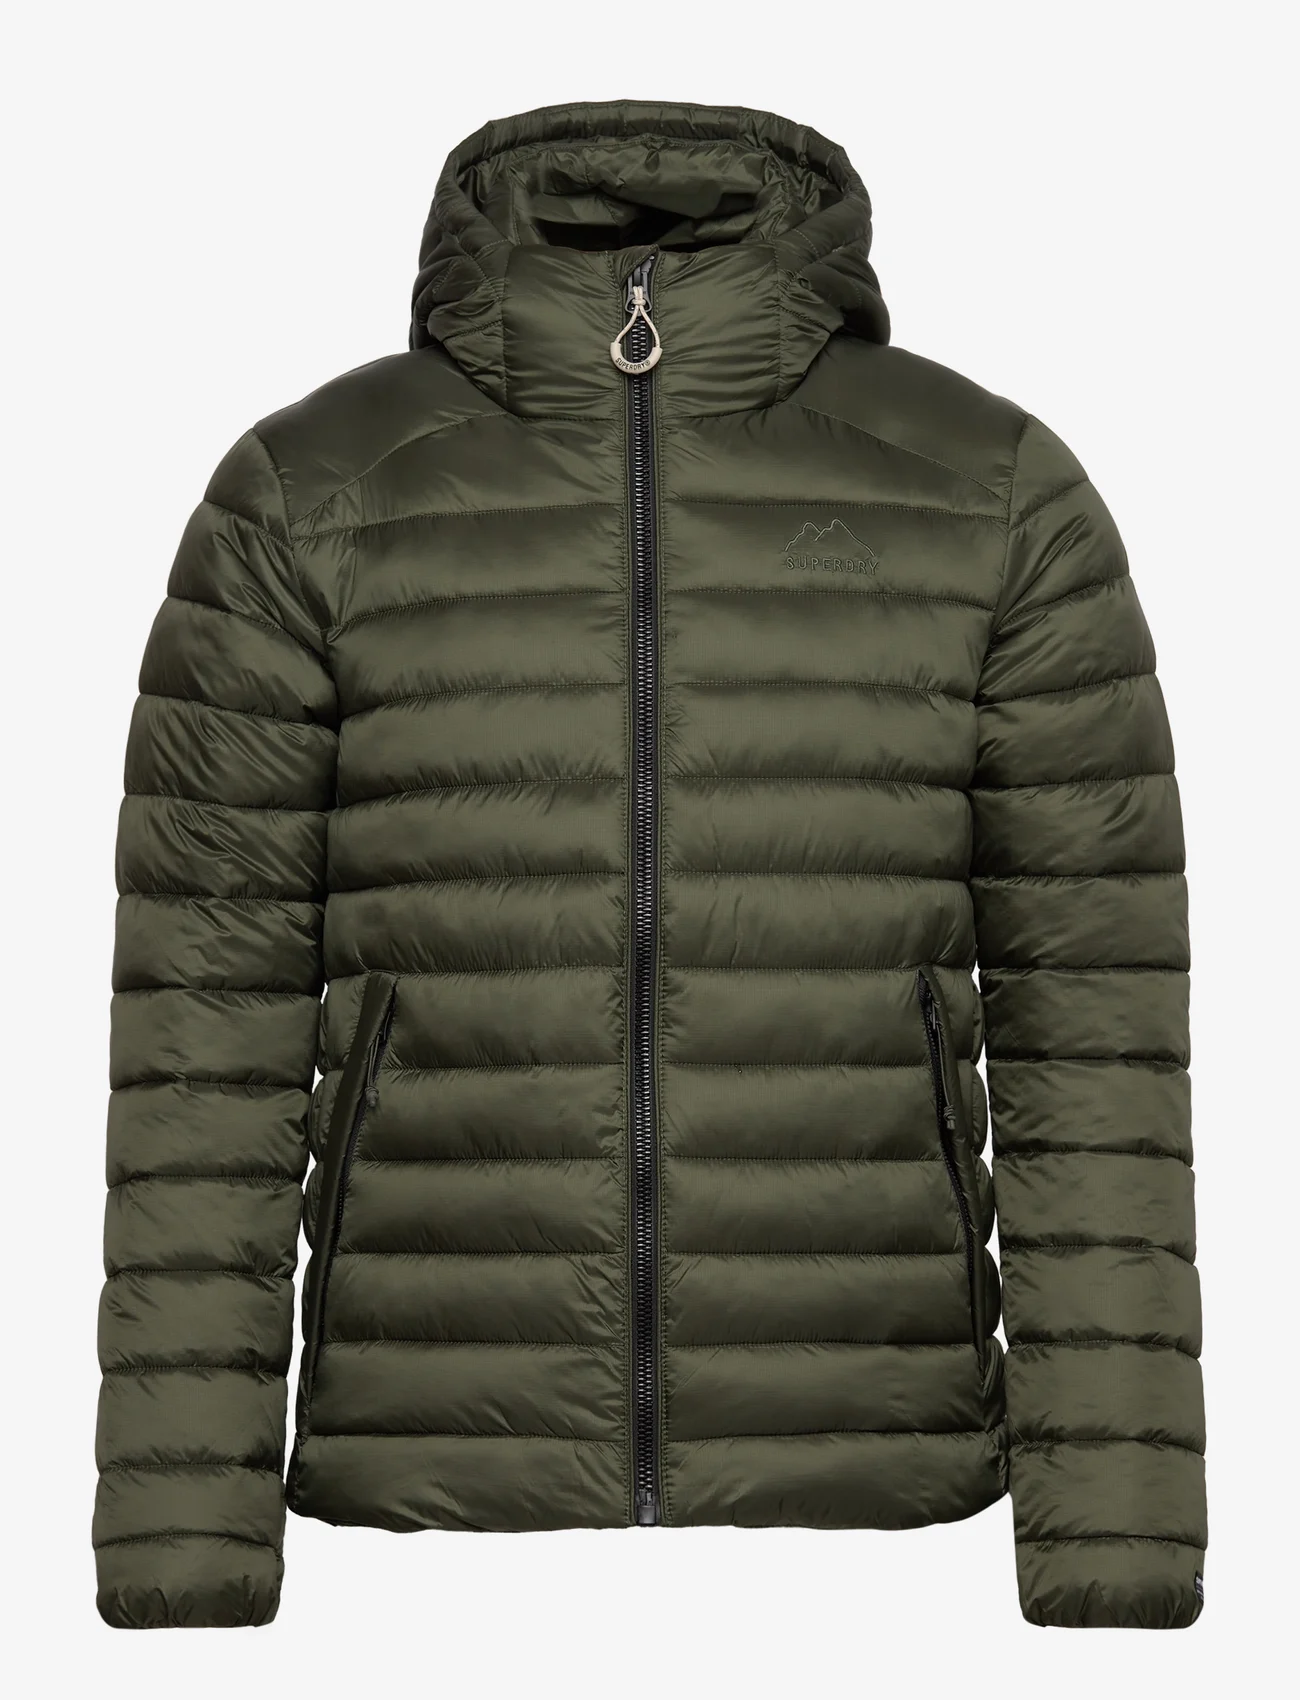 Superdry - HOODED FUJI SPORT PADDED JKT - winter jackets - dark moss green - 0